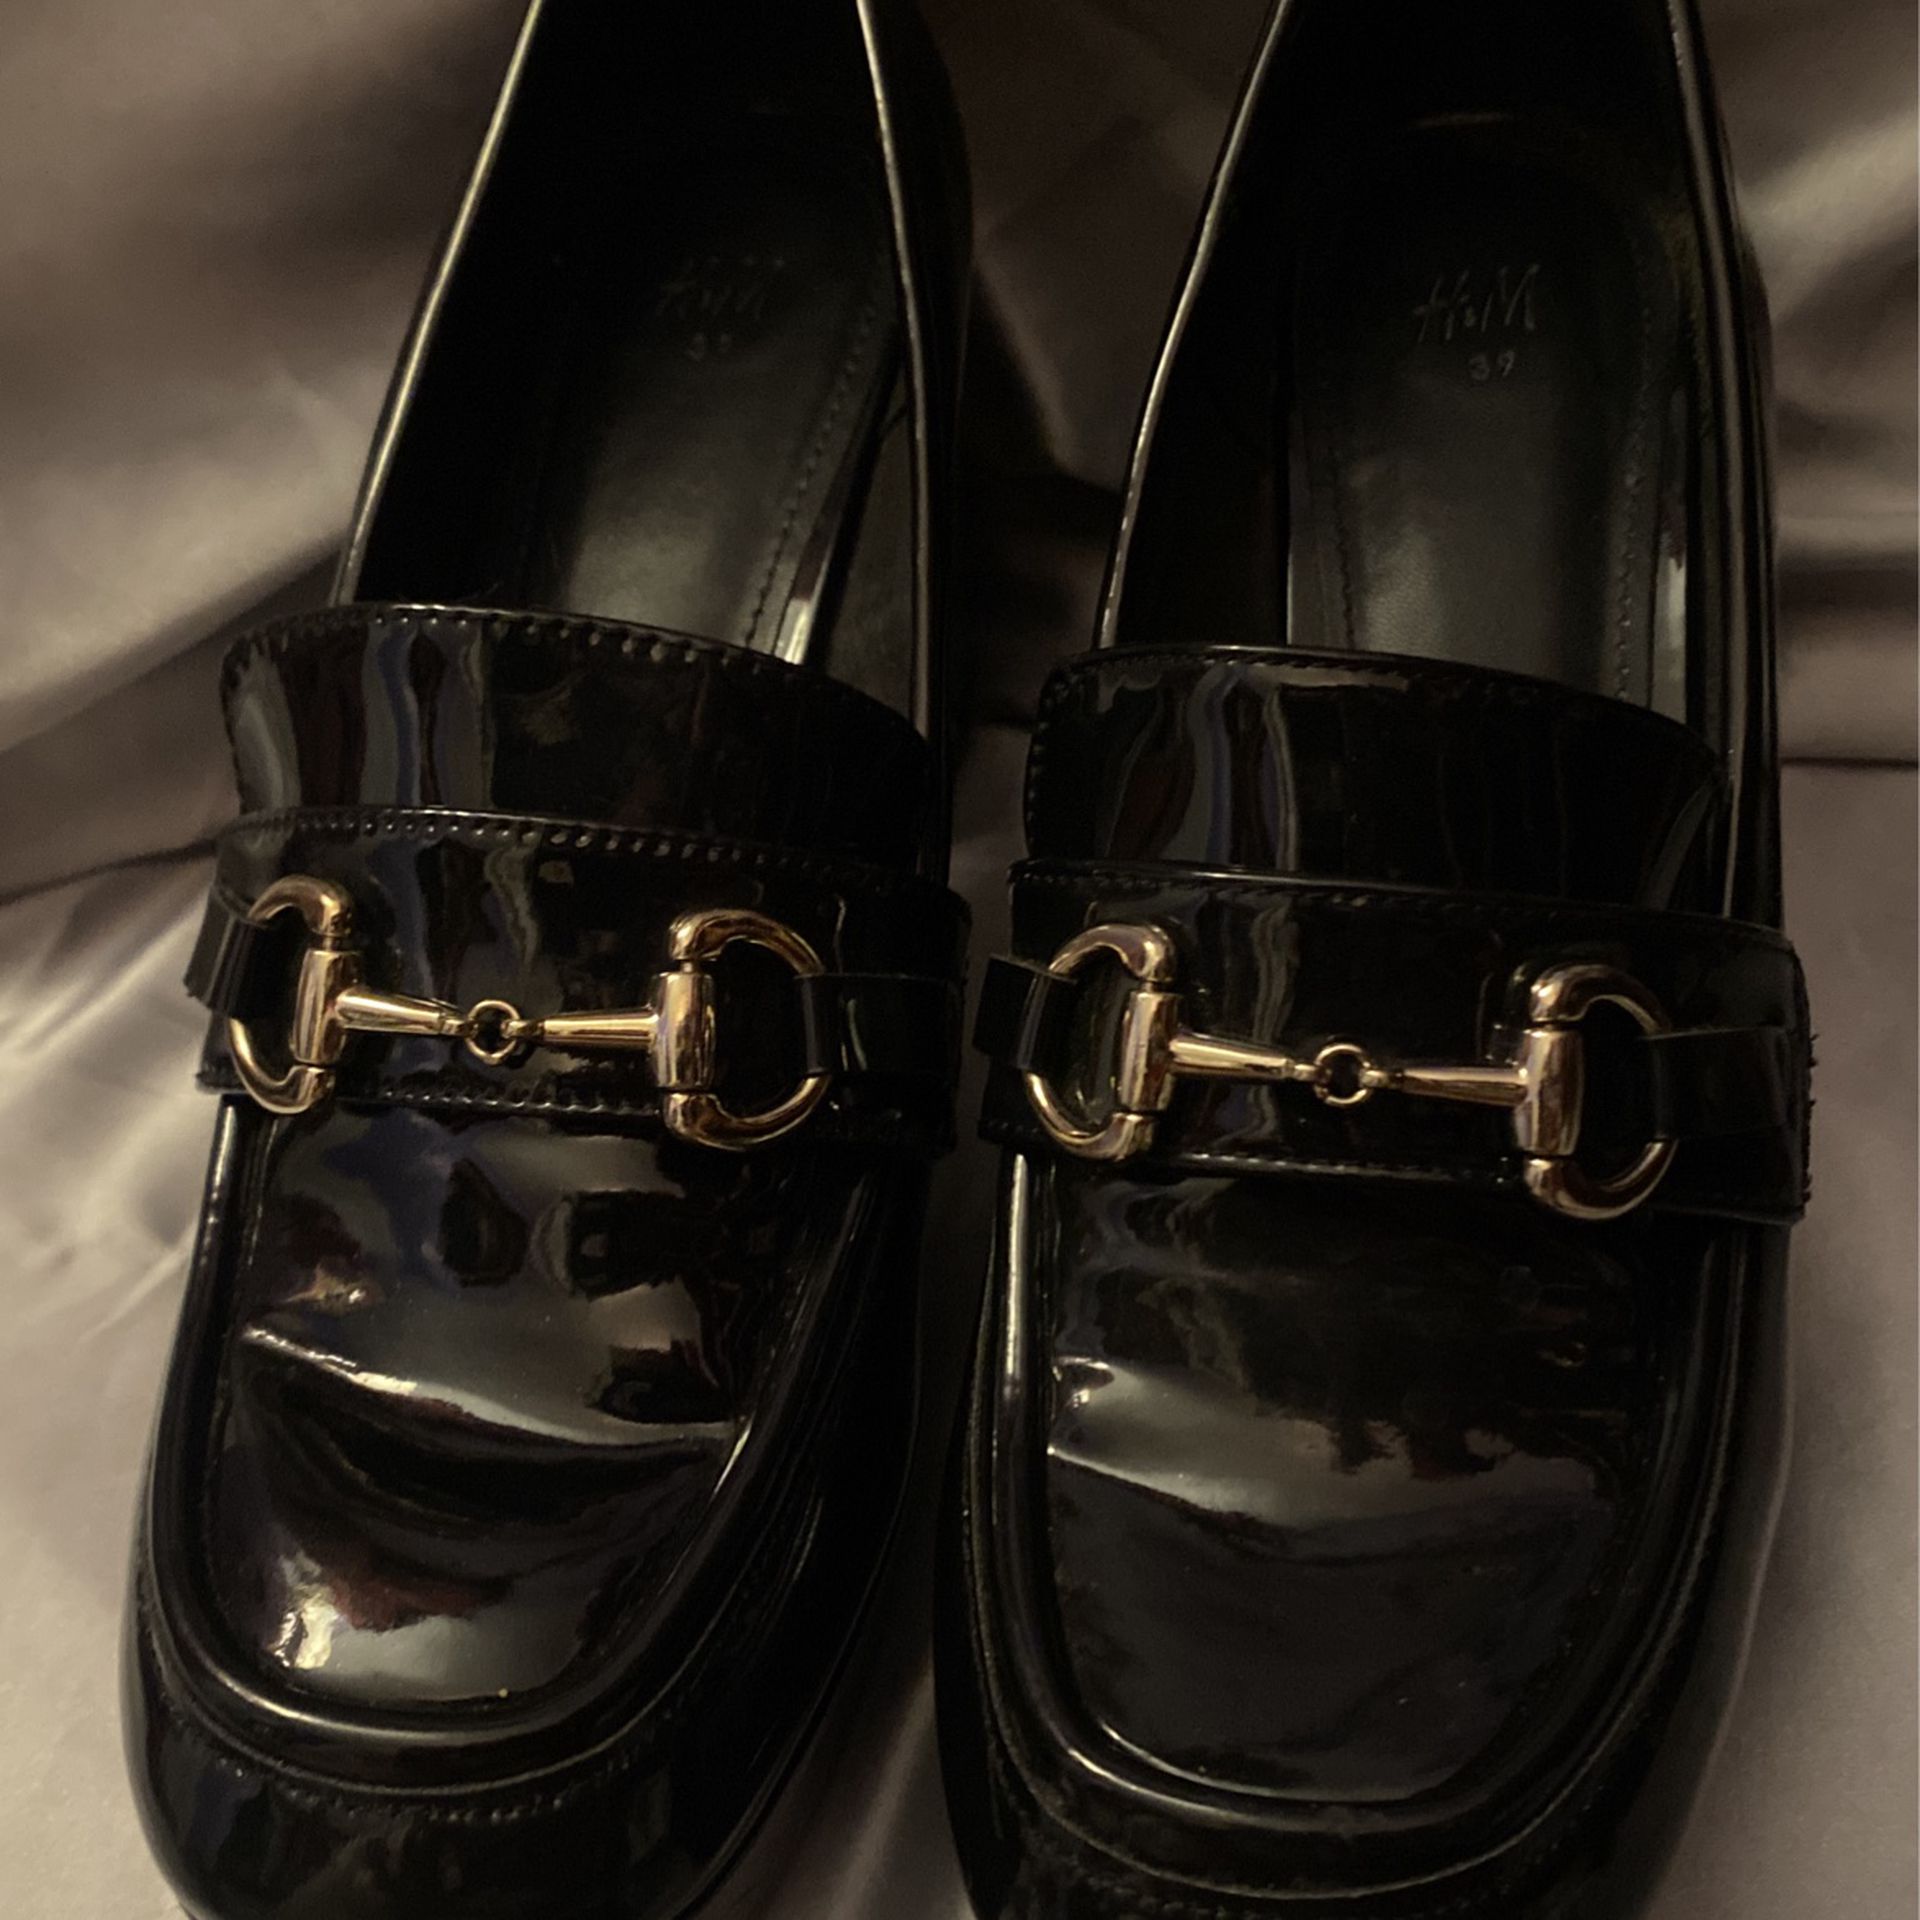 H&M Classy Black Heel